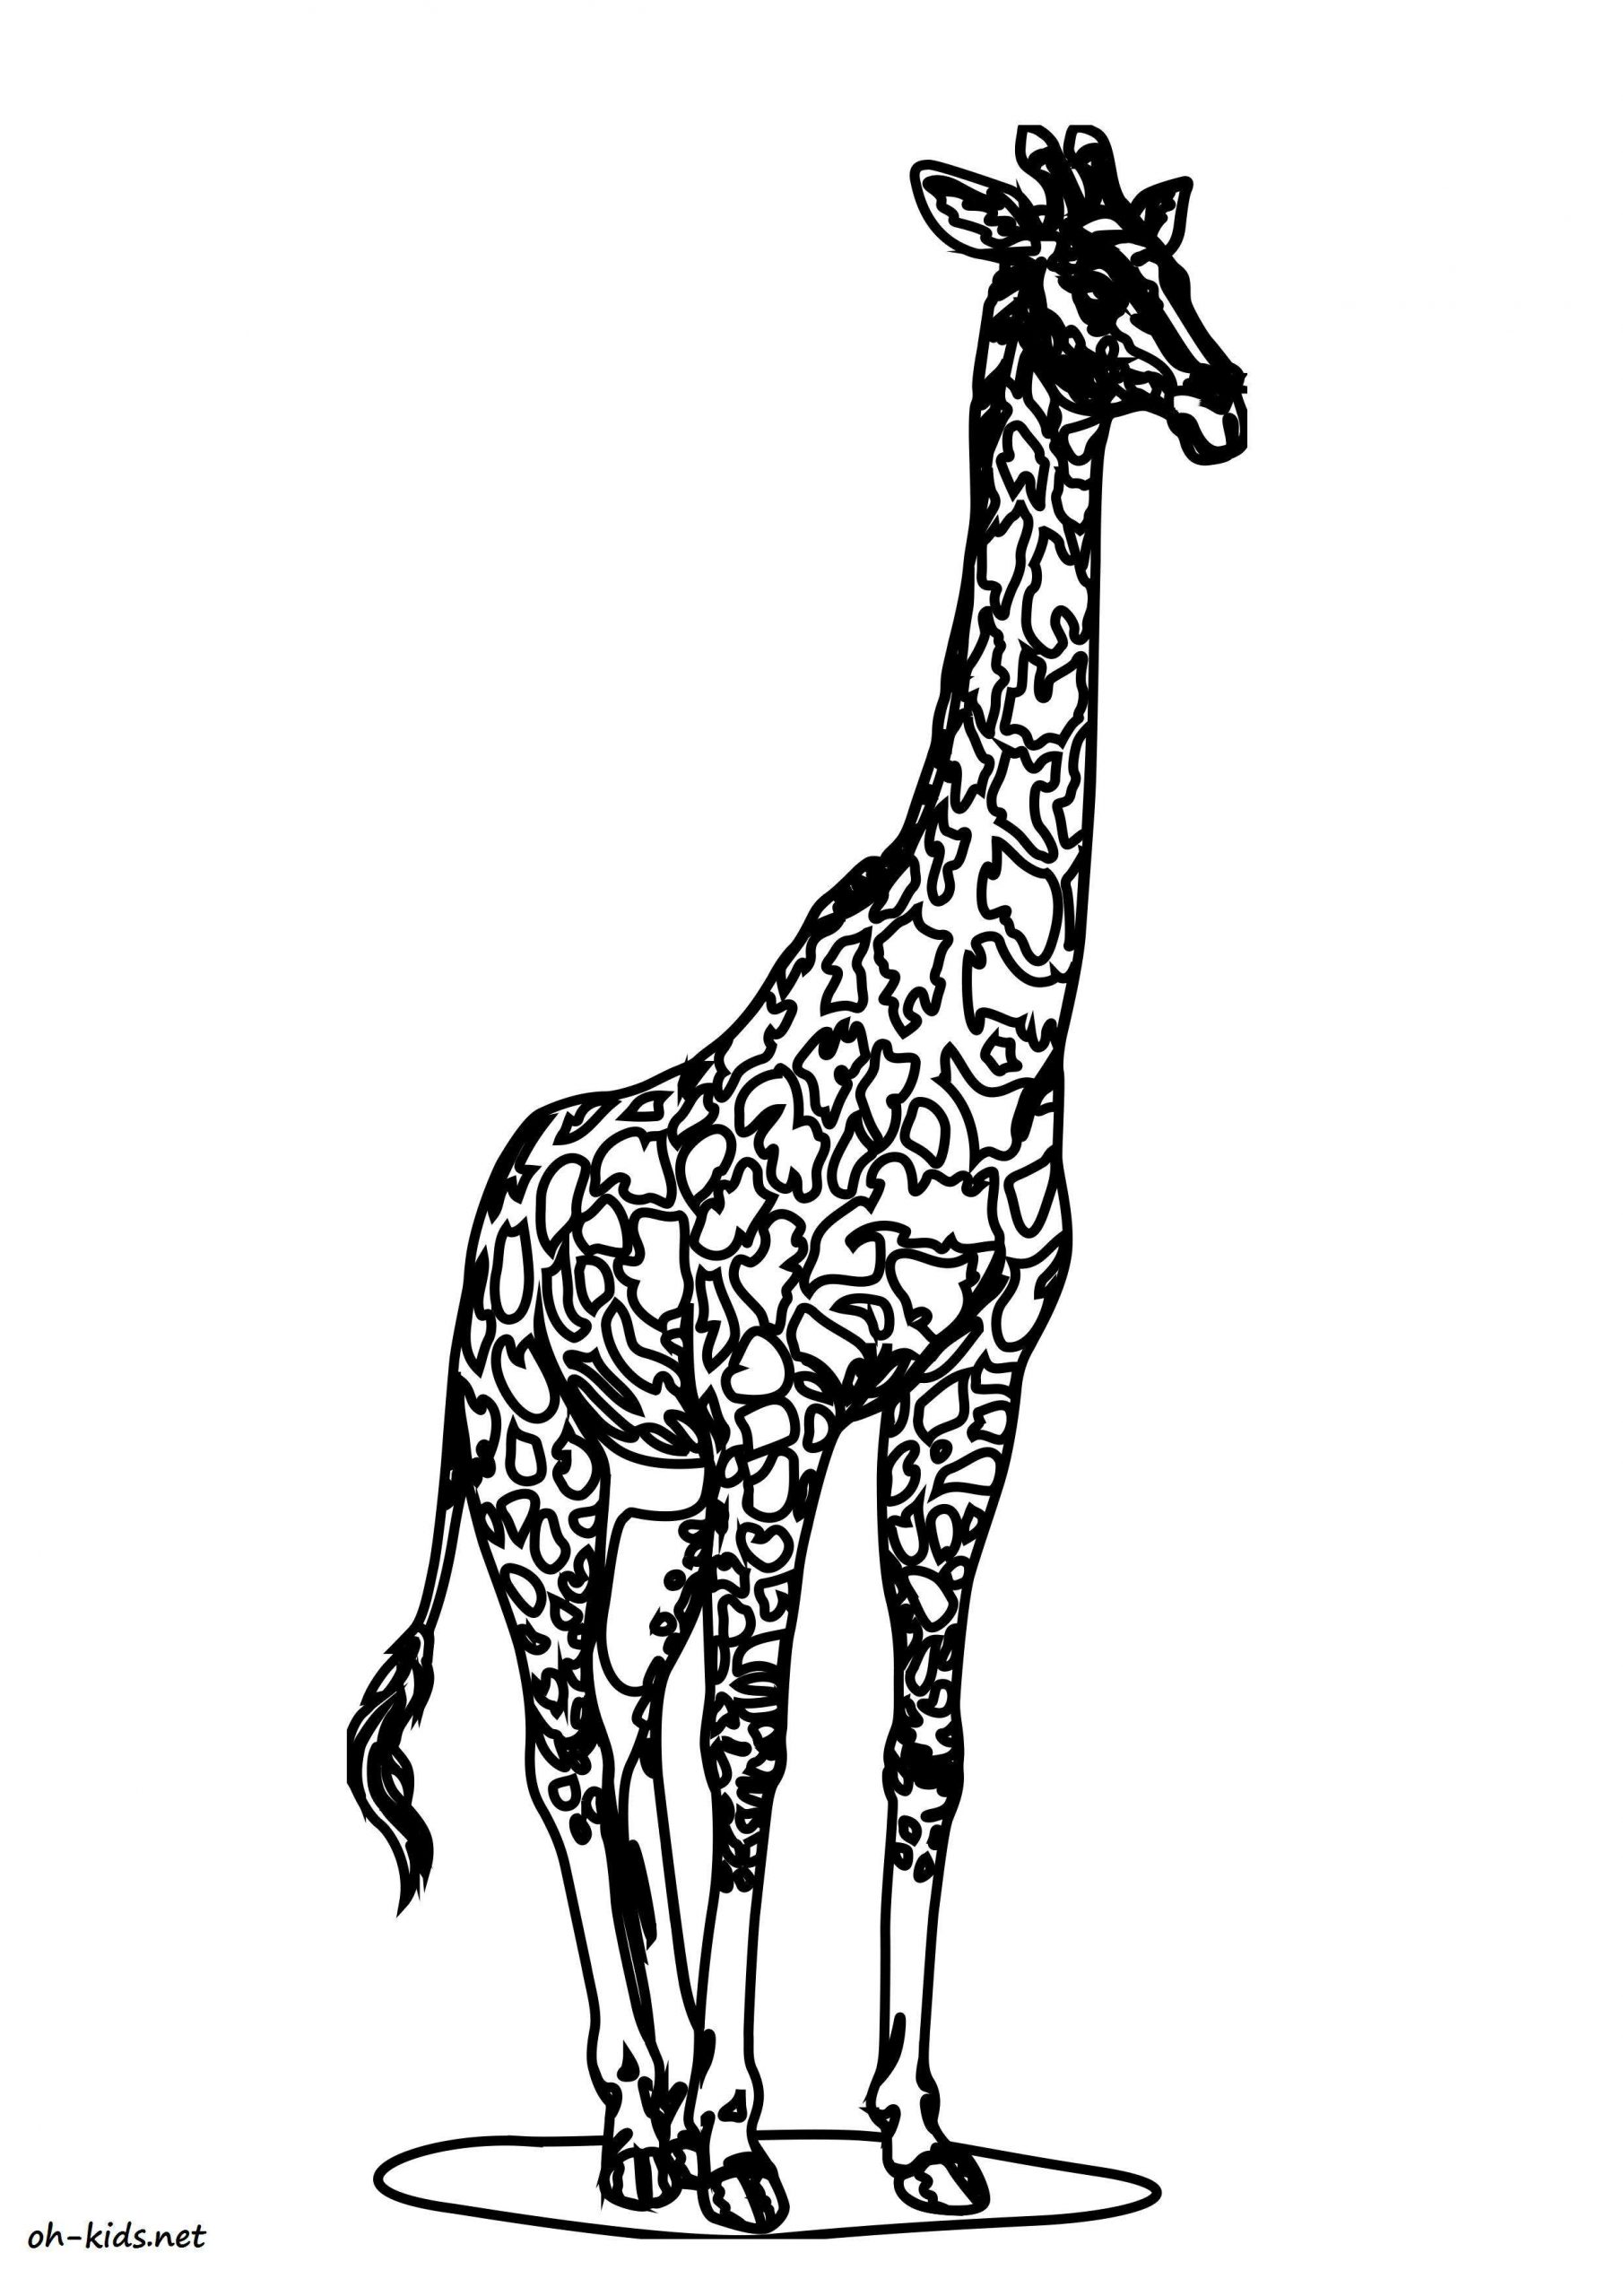 Coloriage Girafe - Oh Kids Fr intérieur Coloriage Girafe